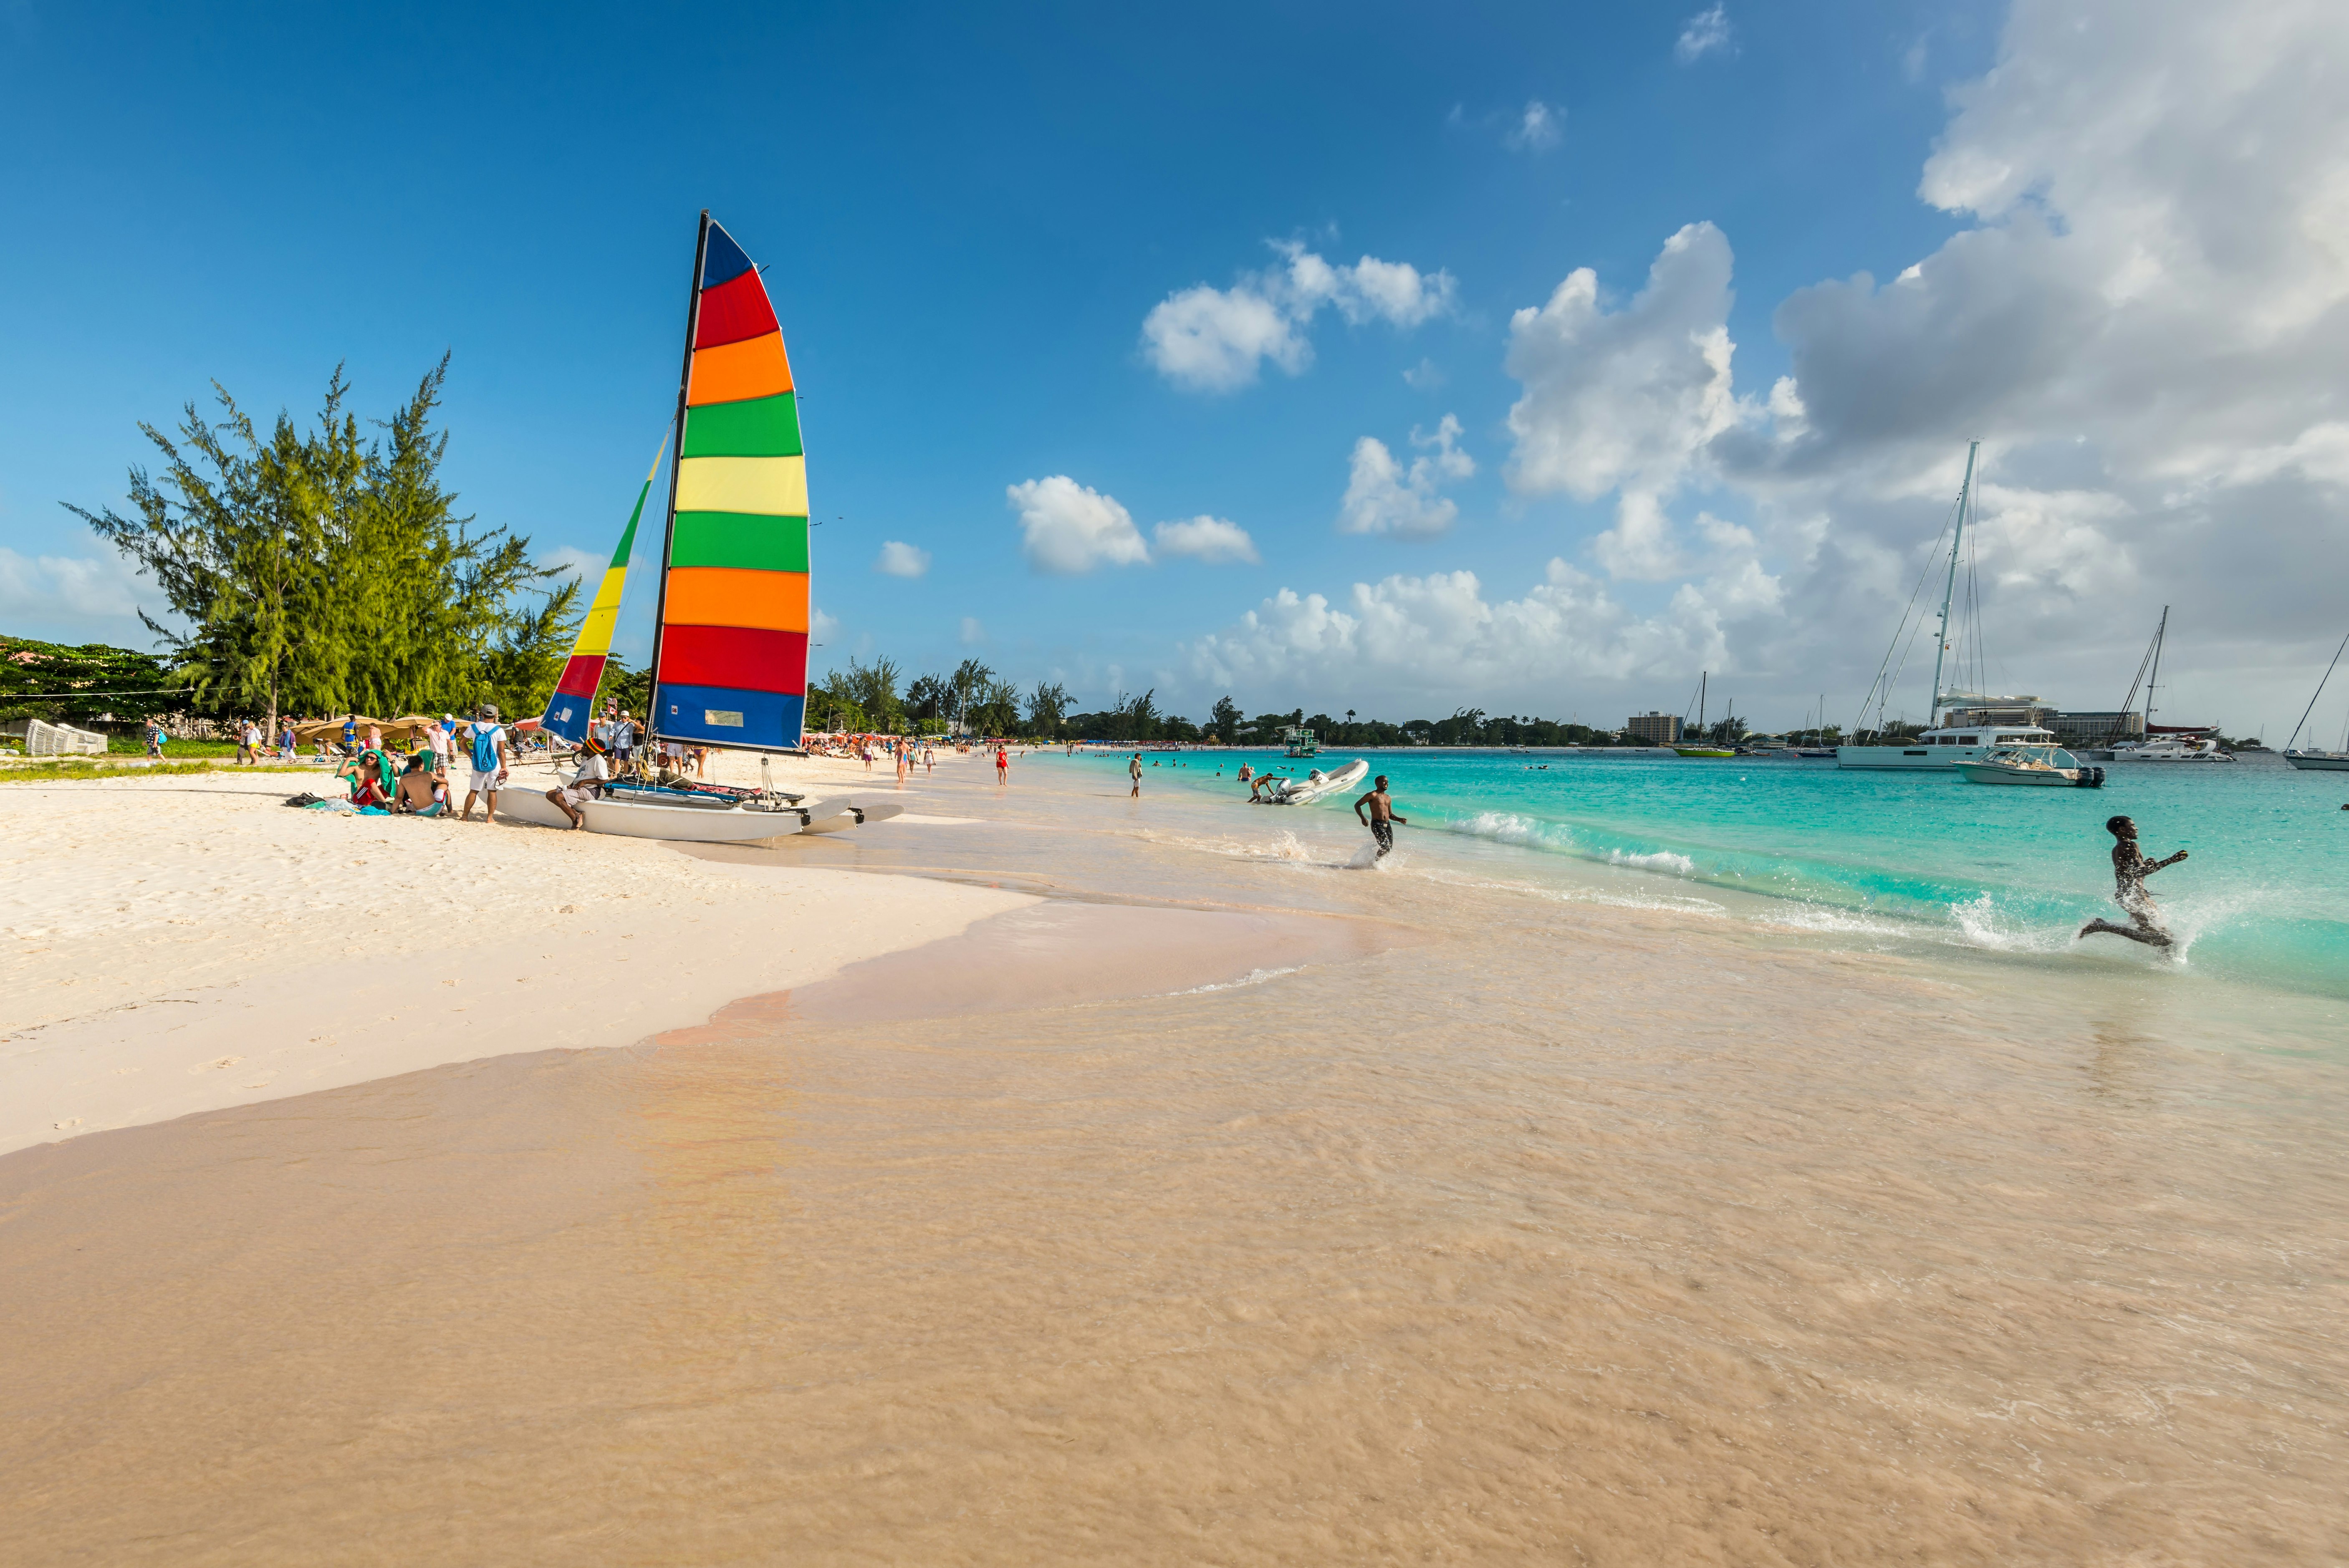 People enjoying the water at Brownes Beach near Bridgetown, Barbados